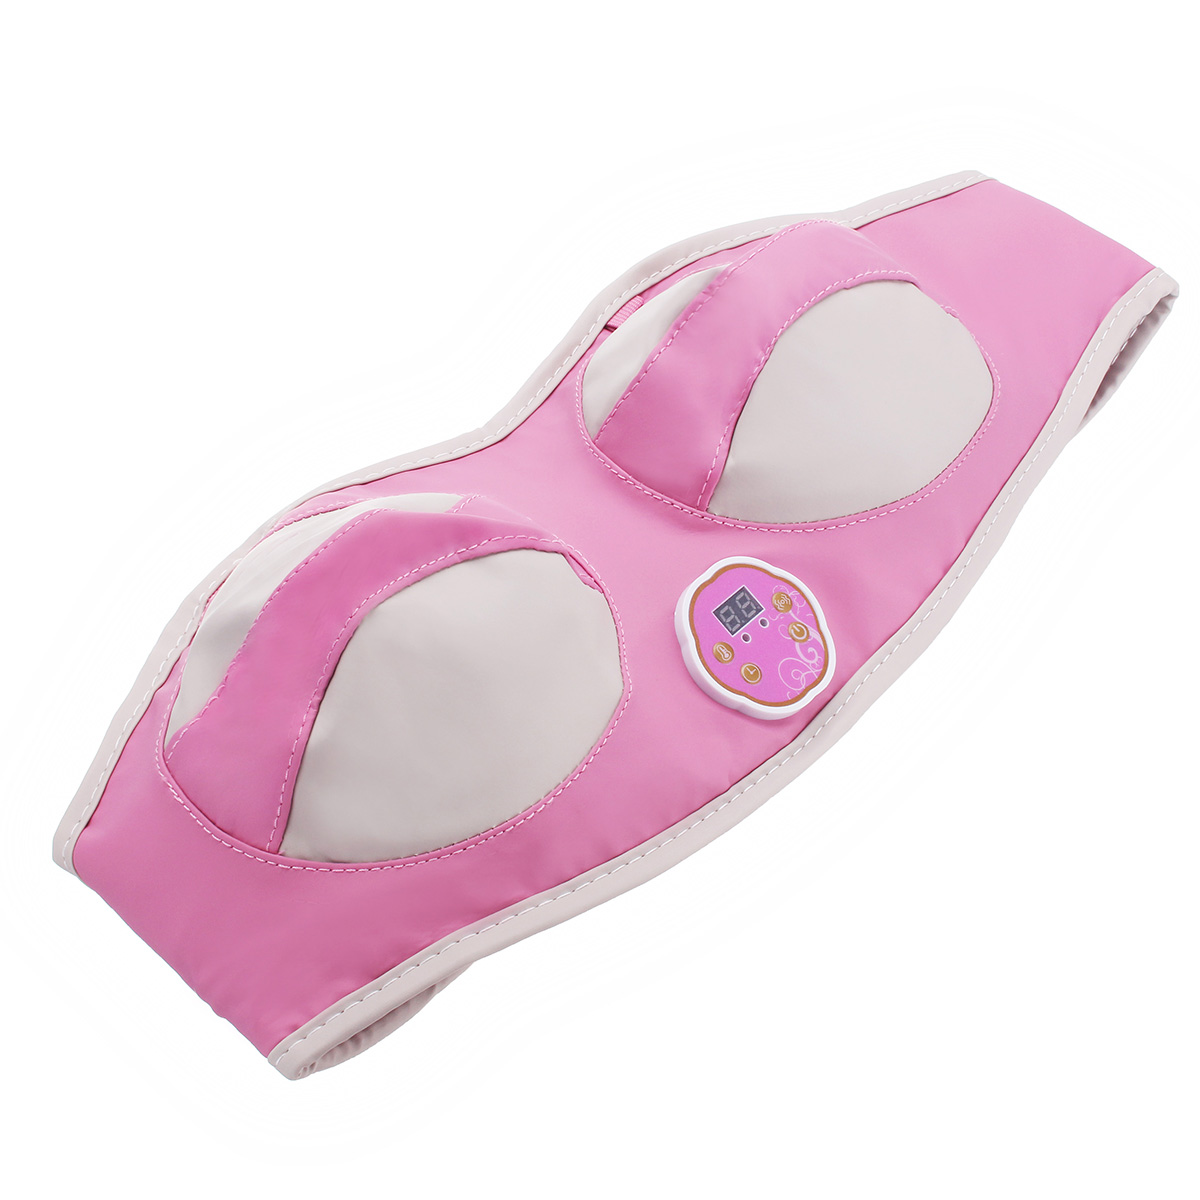 220V-Electronic-Breast-Enhancement-Massager-Vibration-Effective-Enhance-Women-Fashion-Pink-1293380